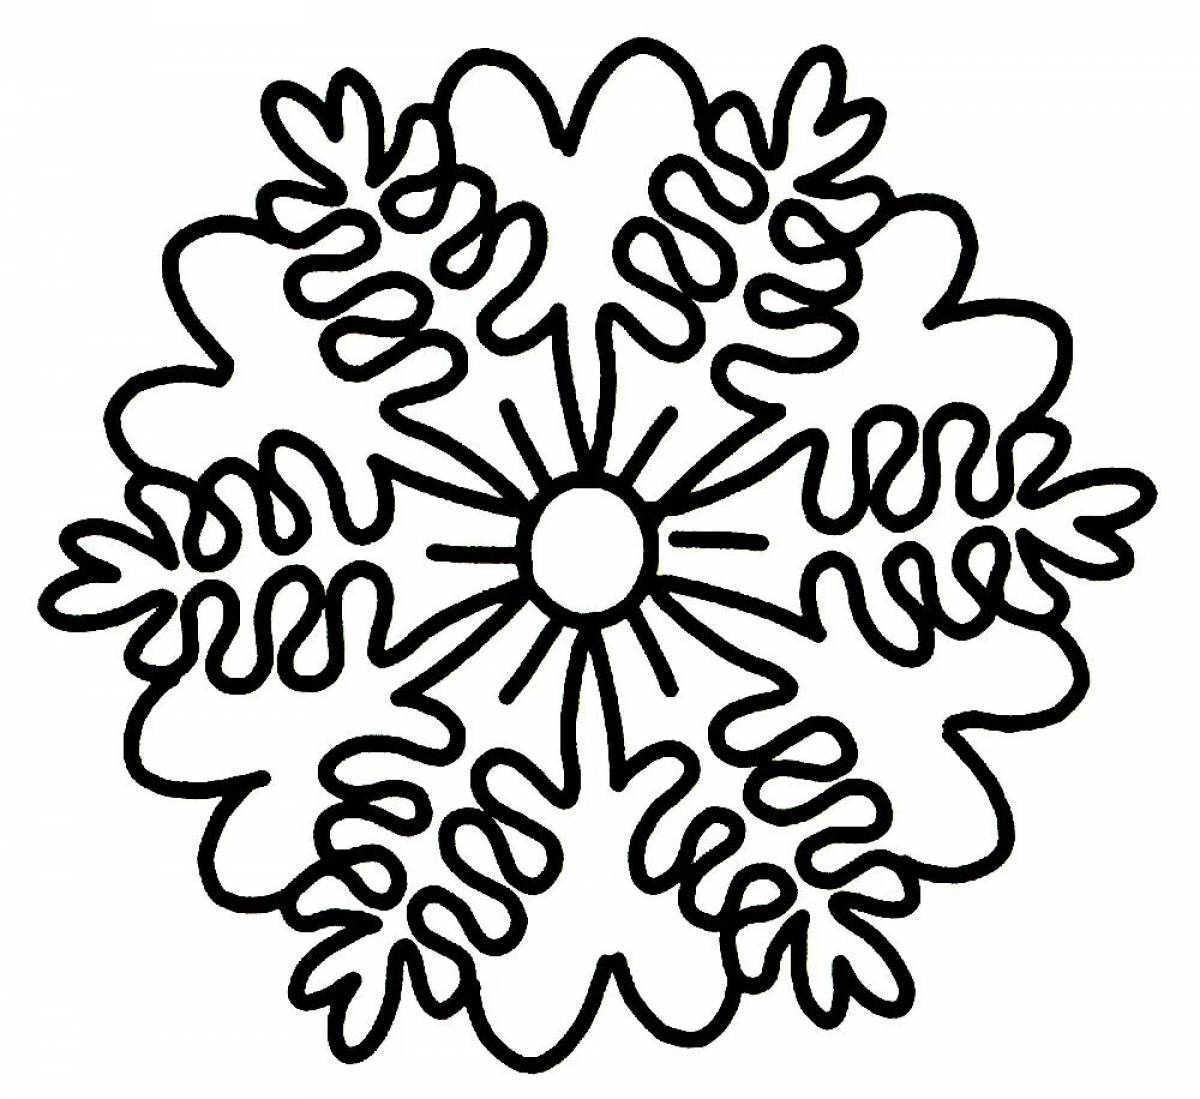 Снежинка картинка / Снежинка рисунок